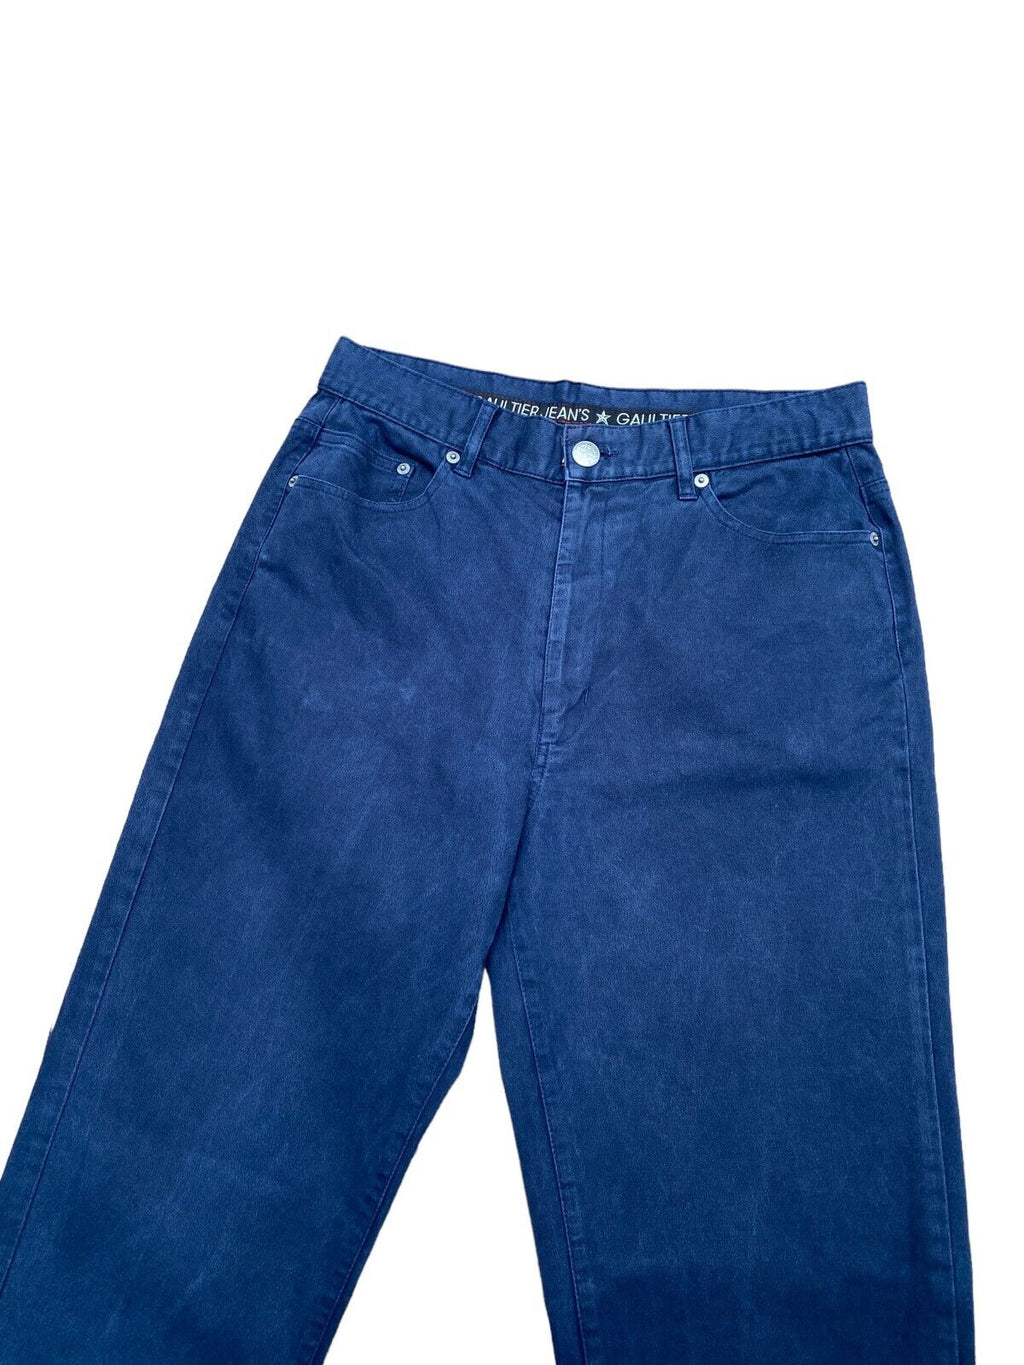 Vintage JPG Jeans Navy Denim pants  Size US 30